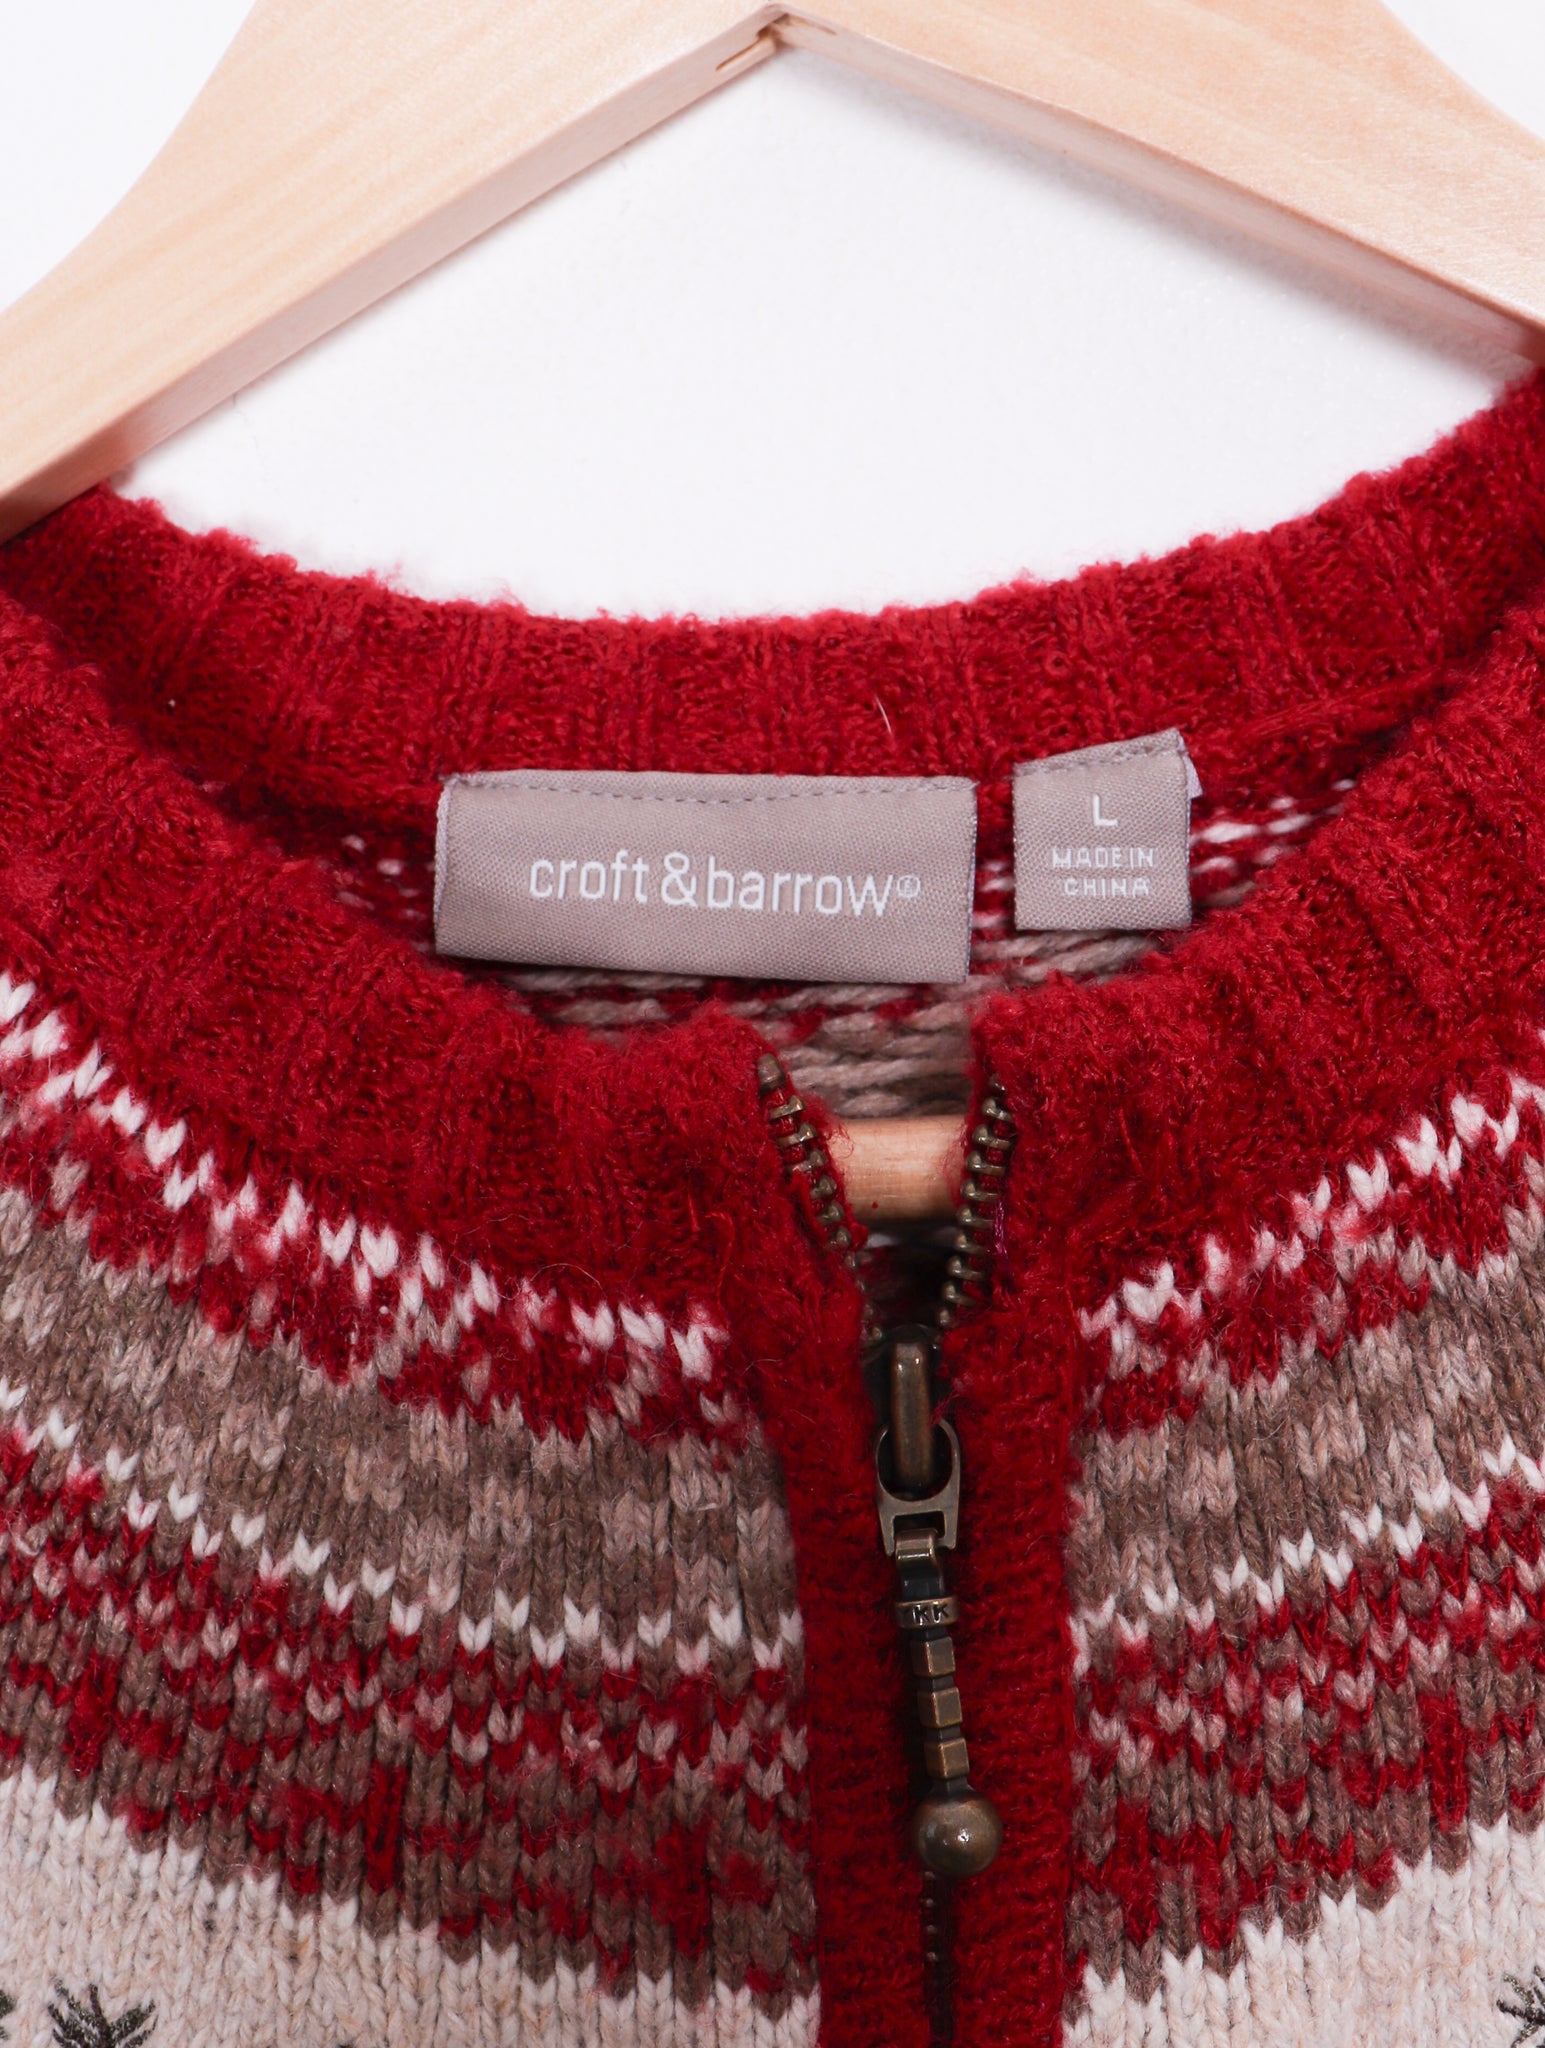 Croft & Barrow Red Zip-Up Sweater